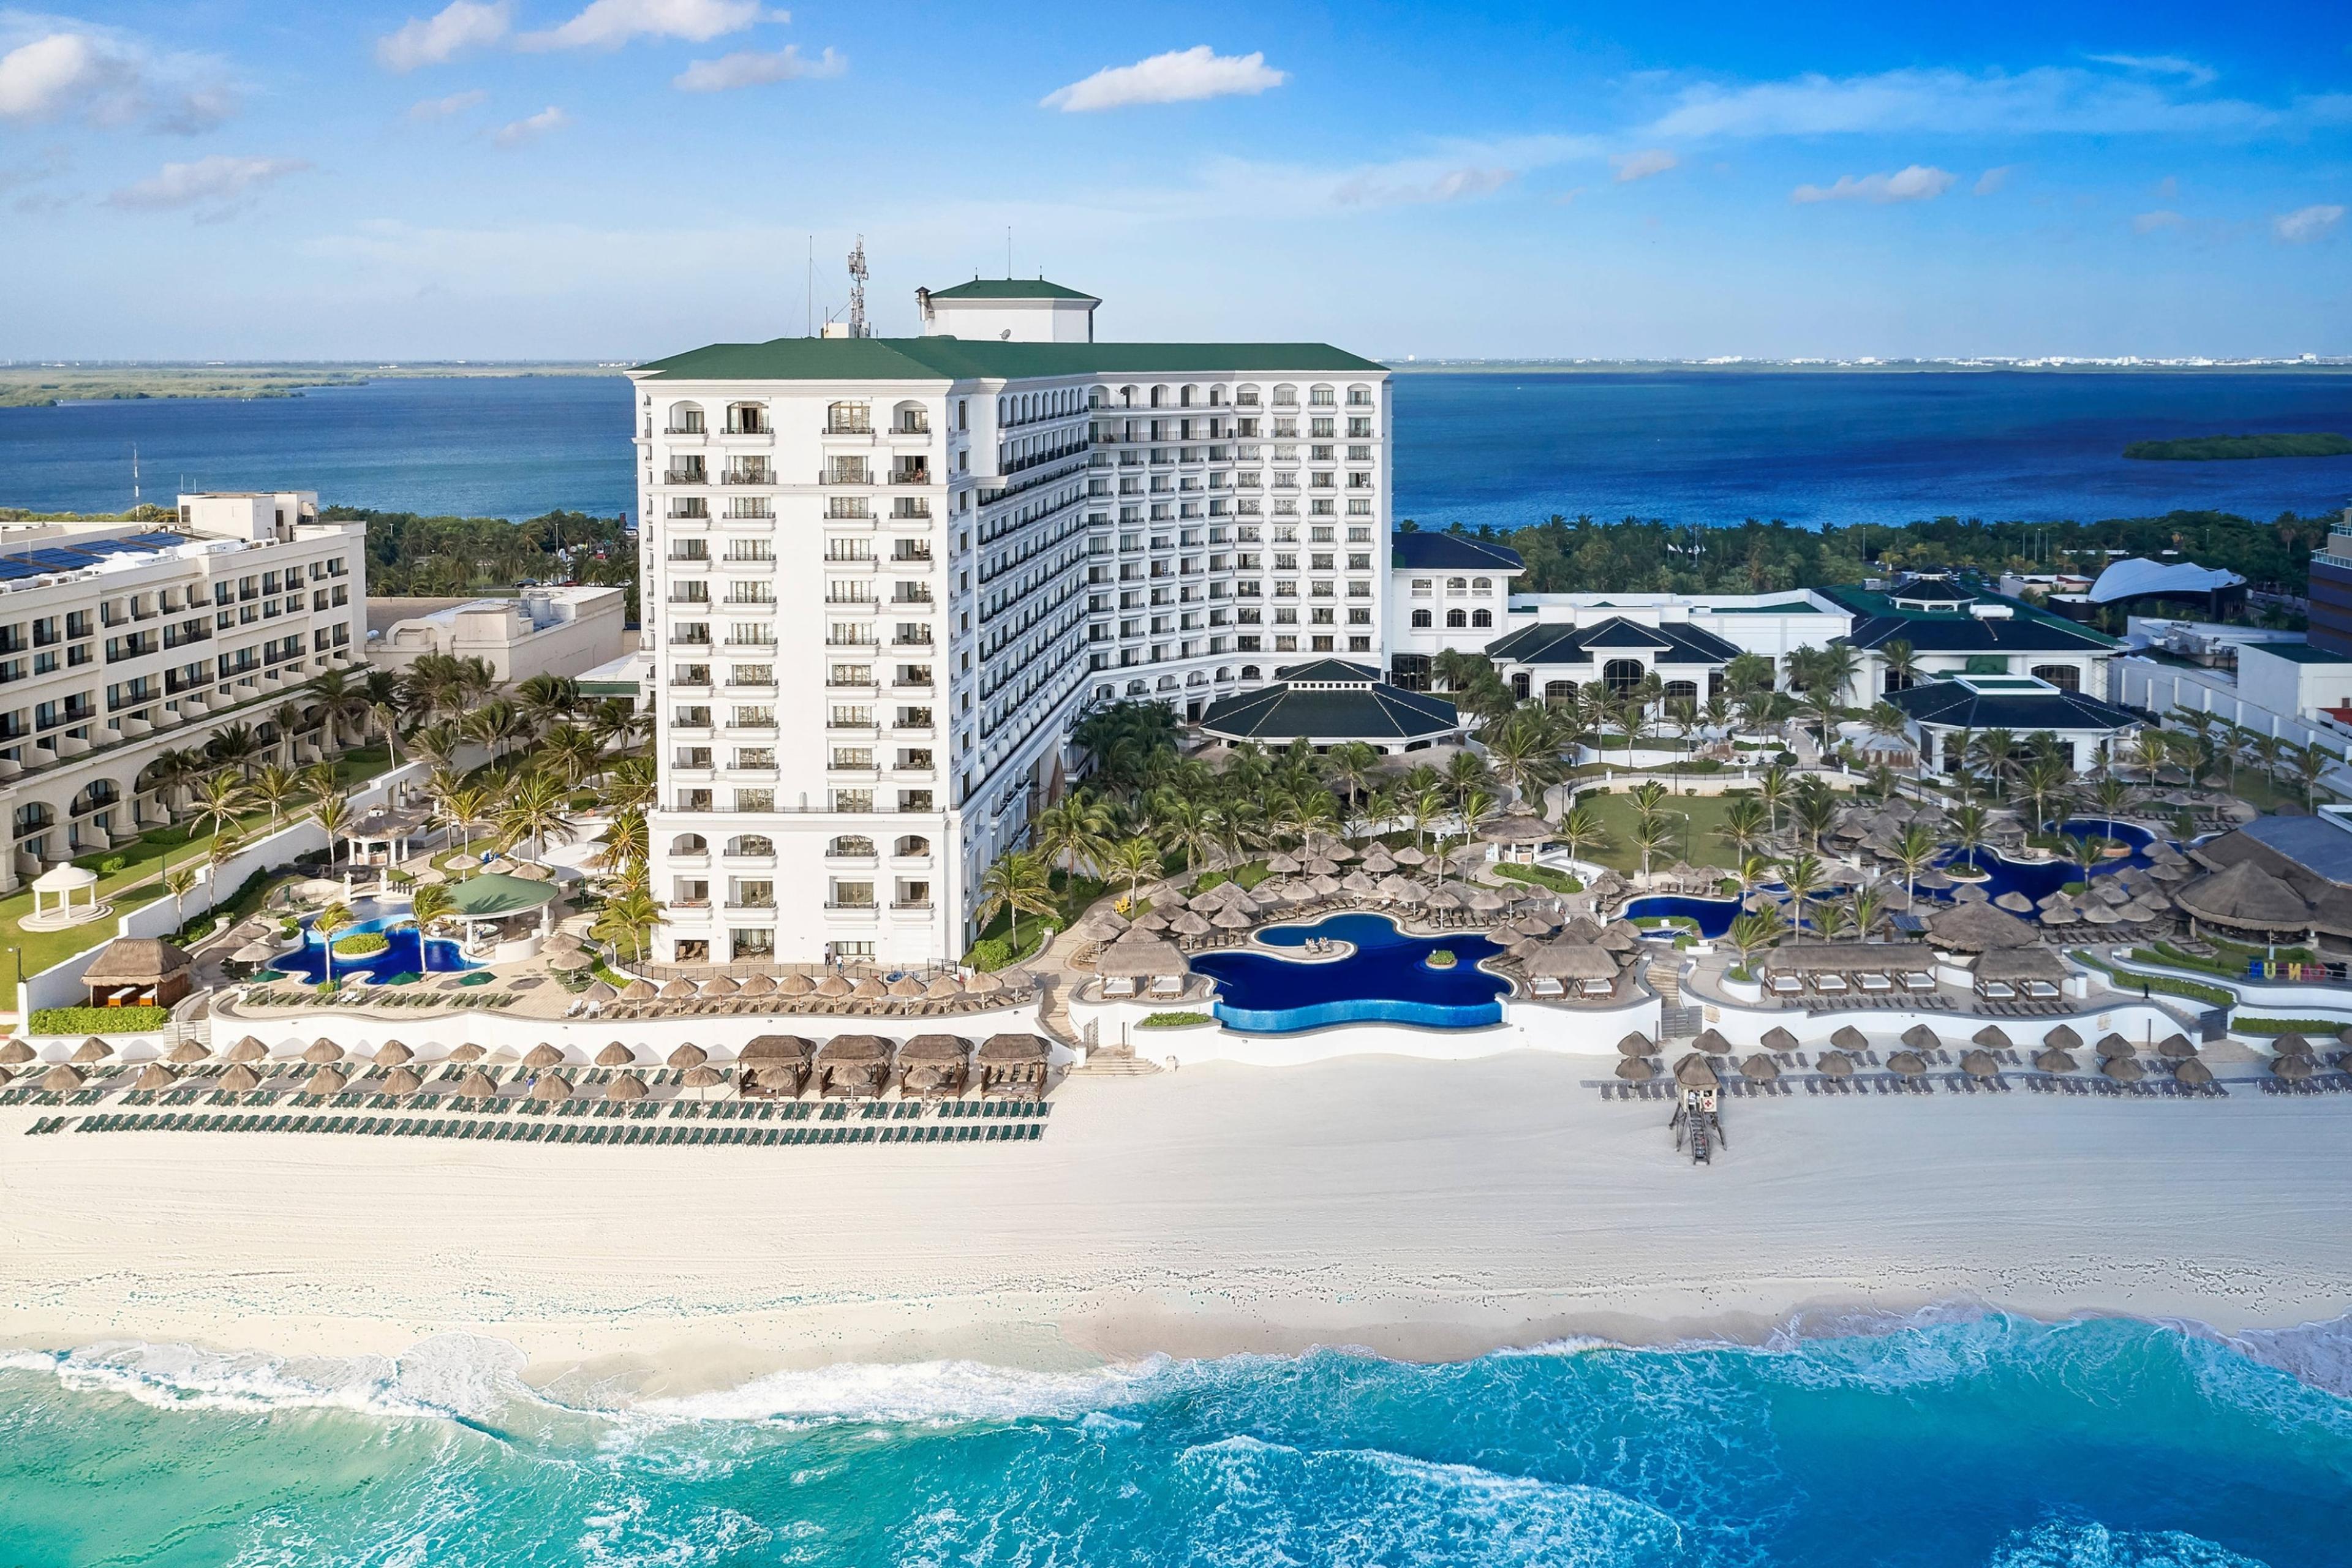 JW Marriott Cancun Resort & Spa - Cancun, Quintana Roo, Mexico